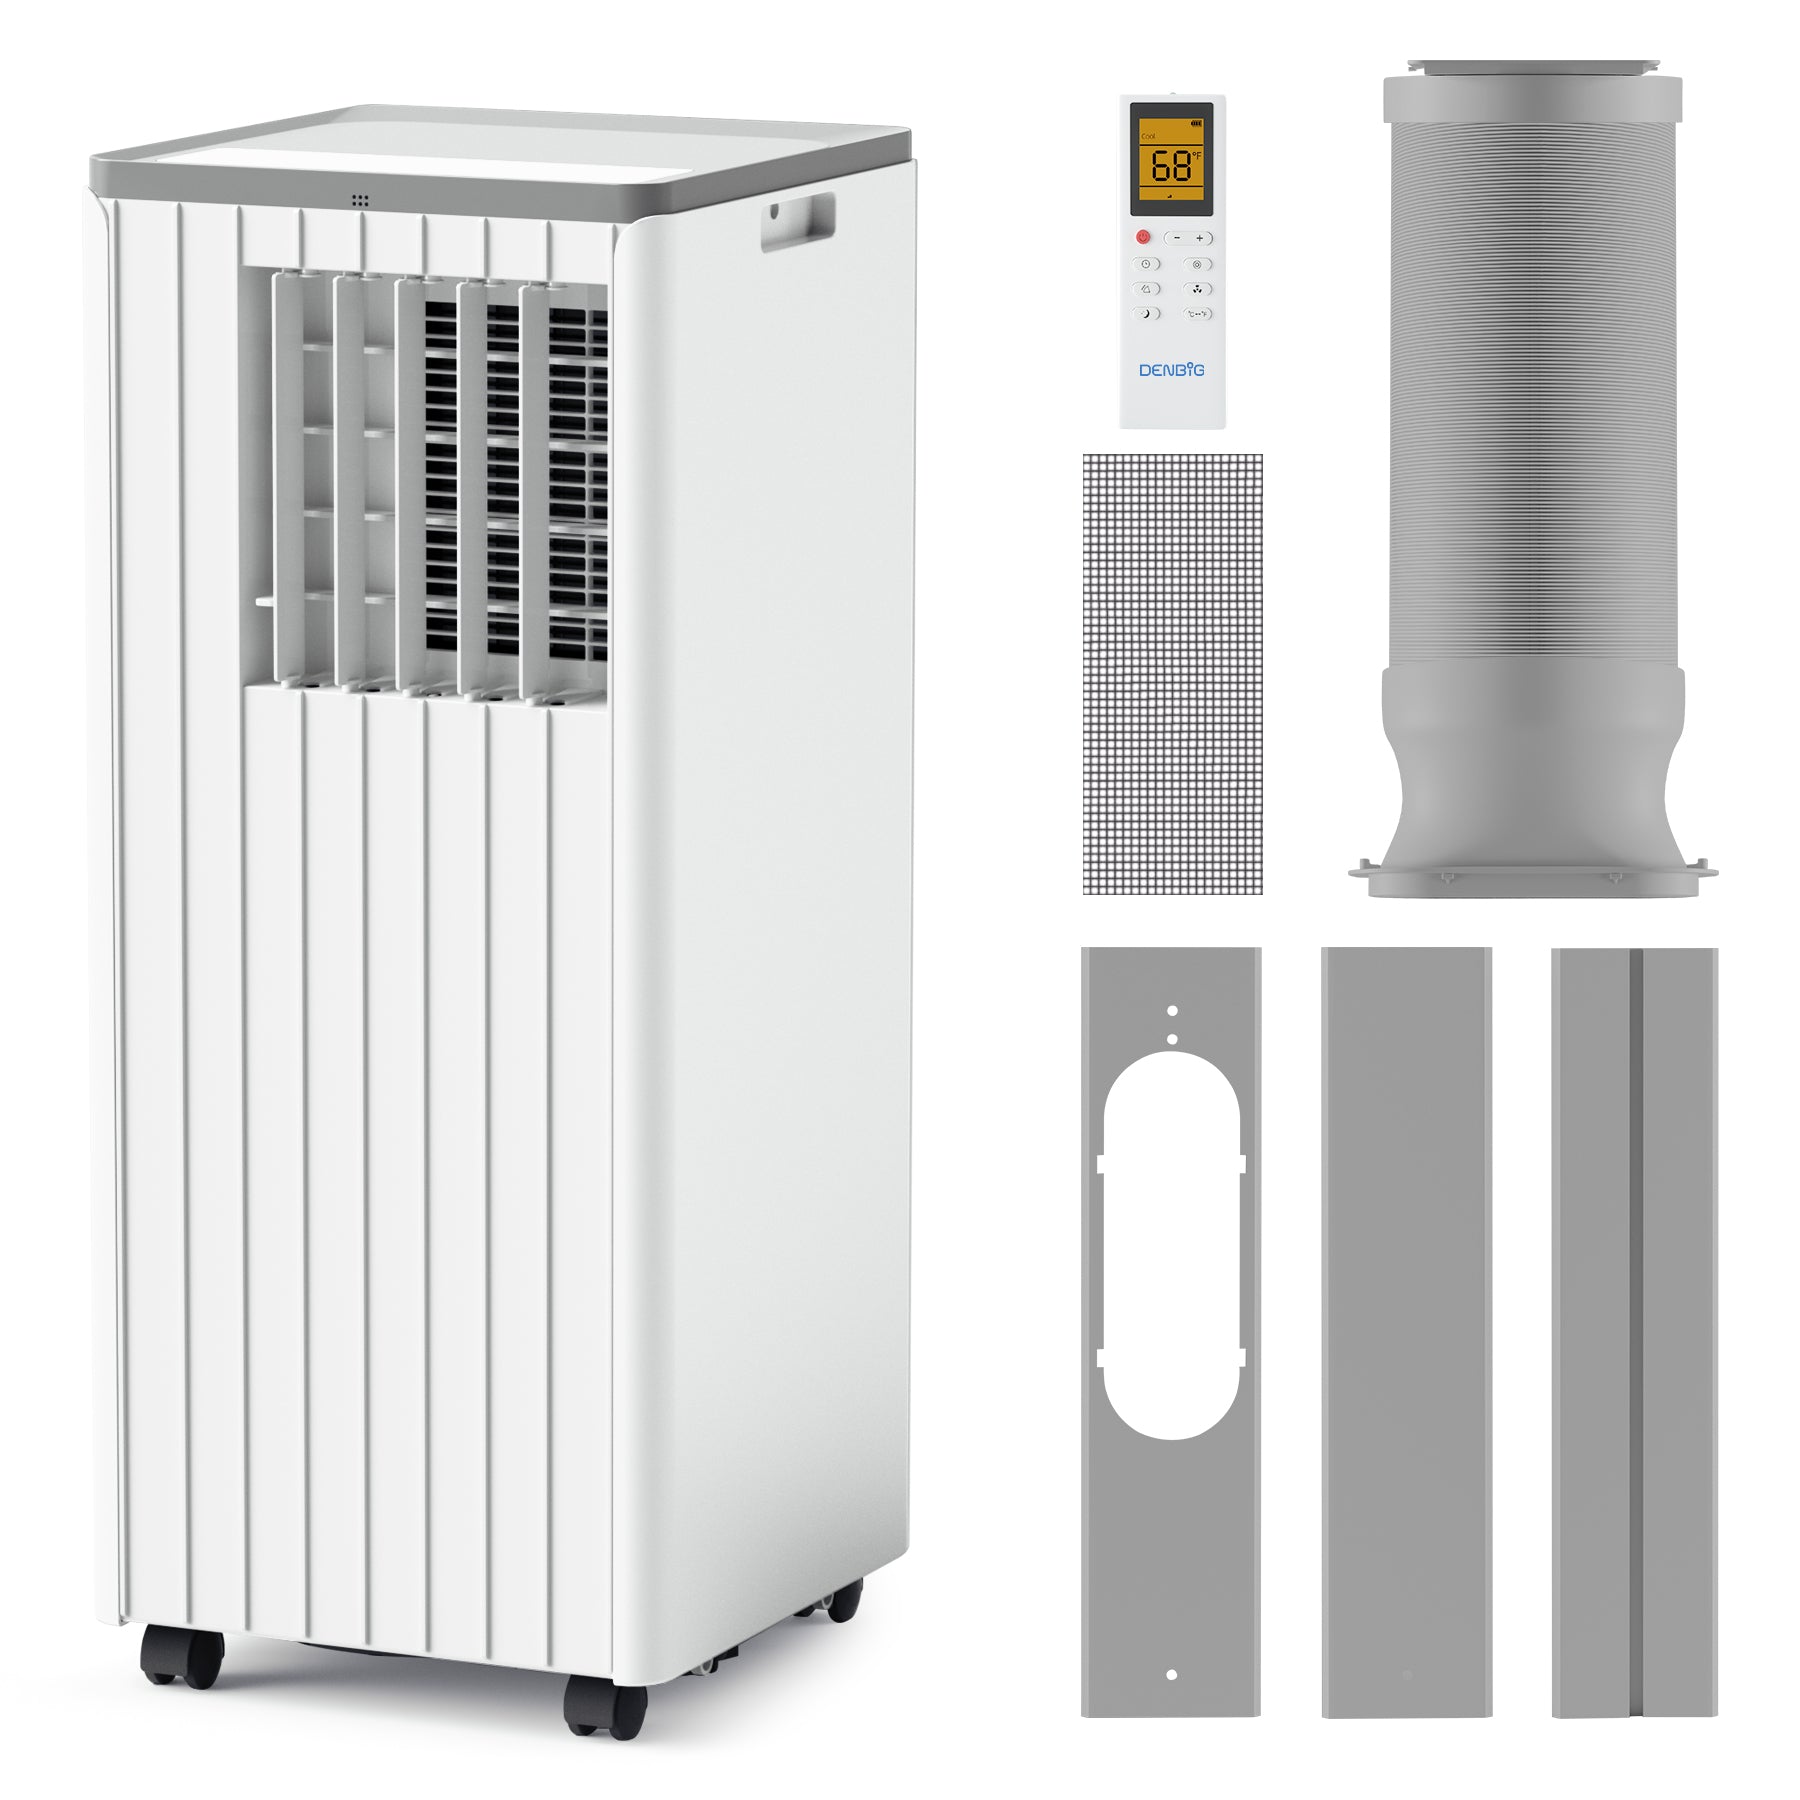 8,000 BTU Portable Air Conditioner, White